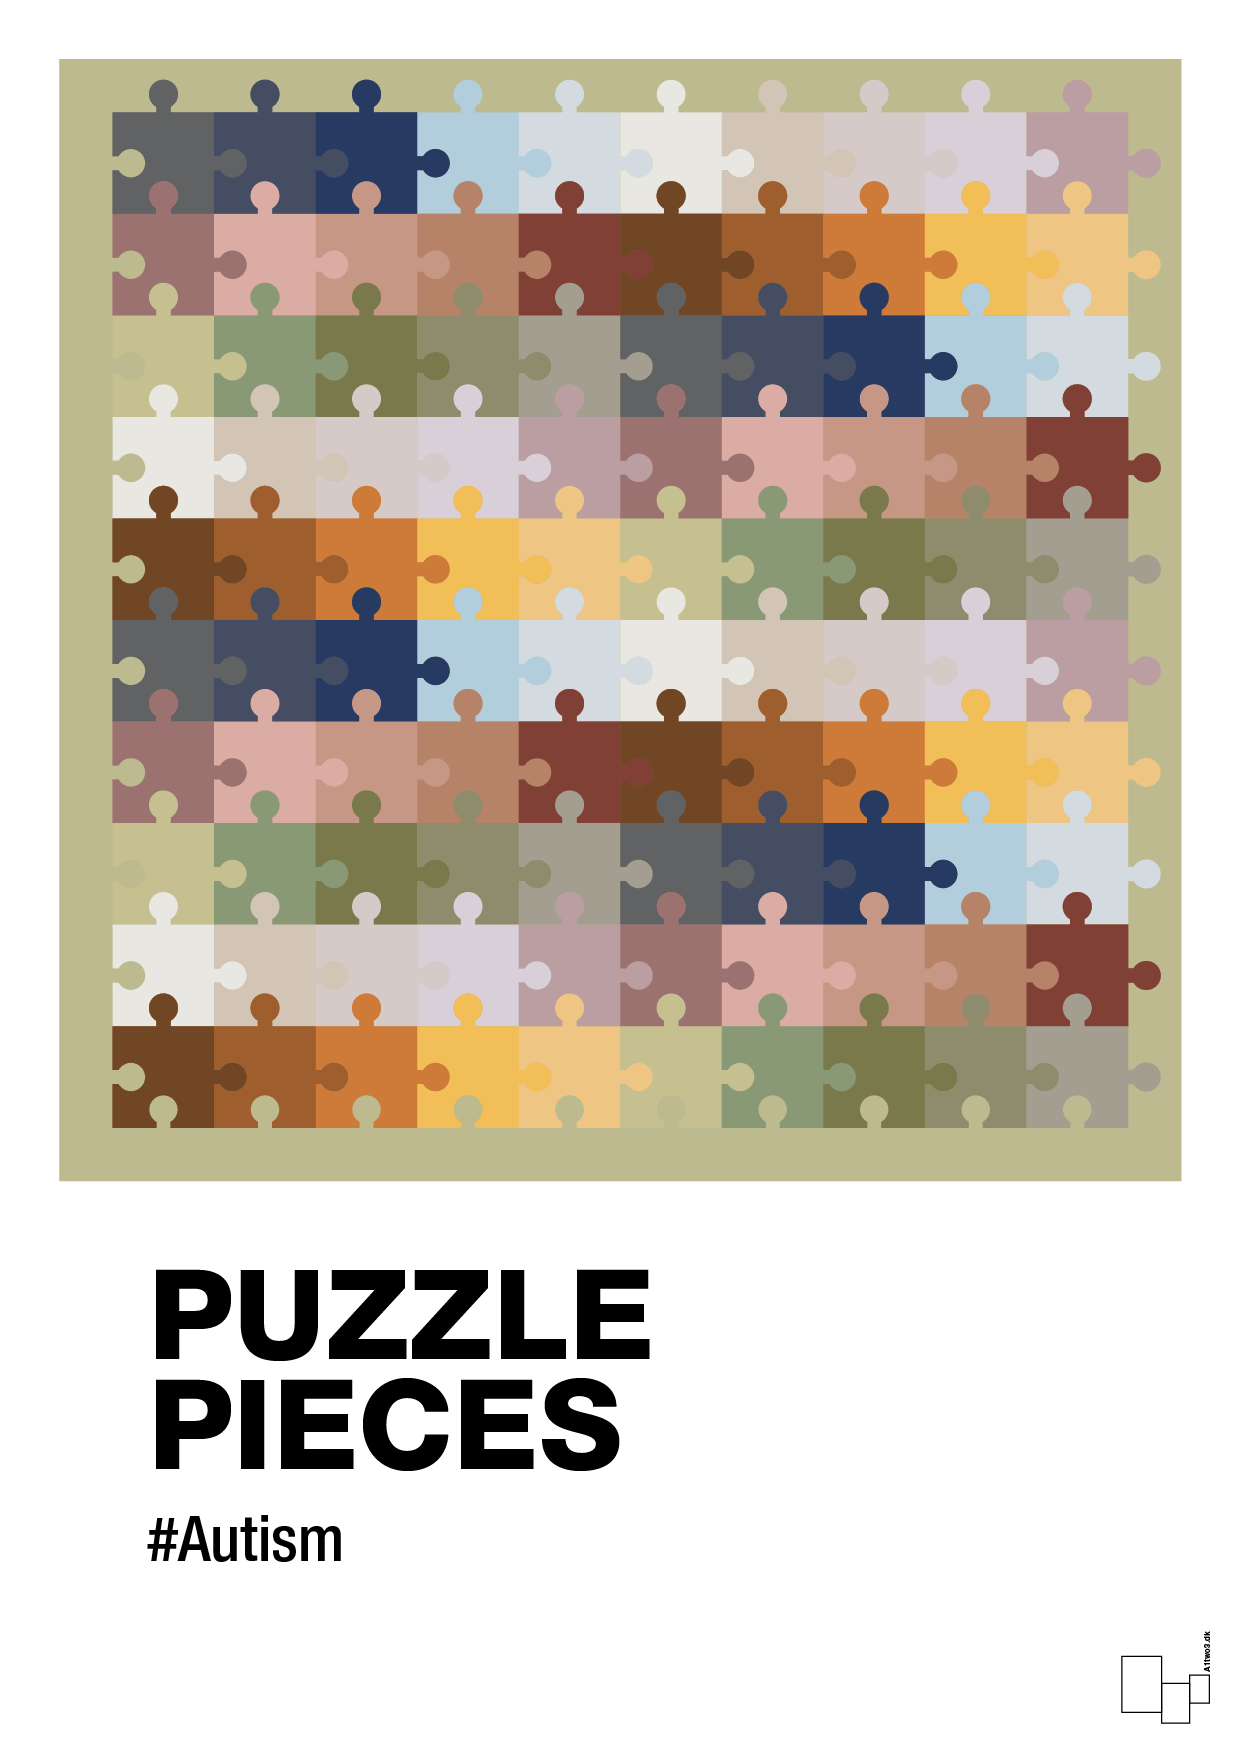 puzzle pieces - Plakat med Samfund i Back to Nature